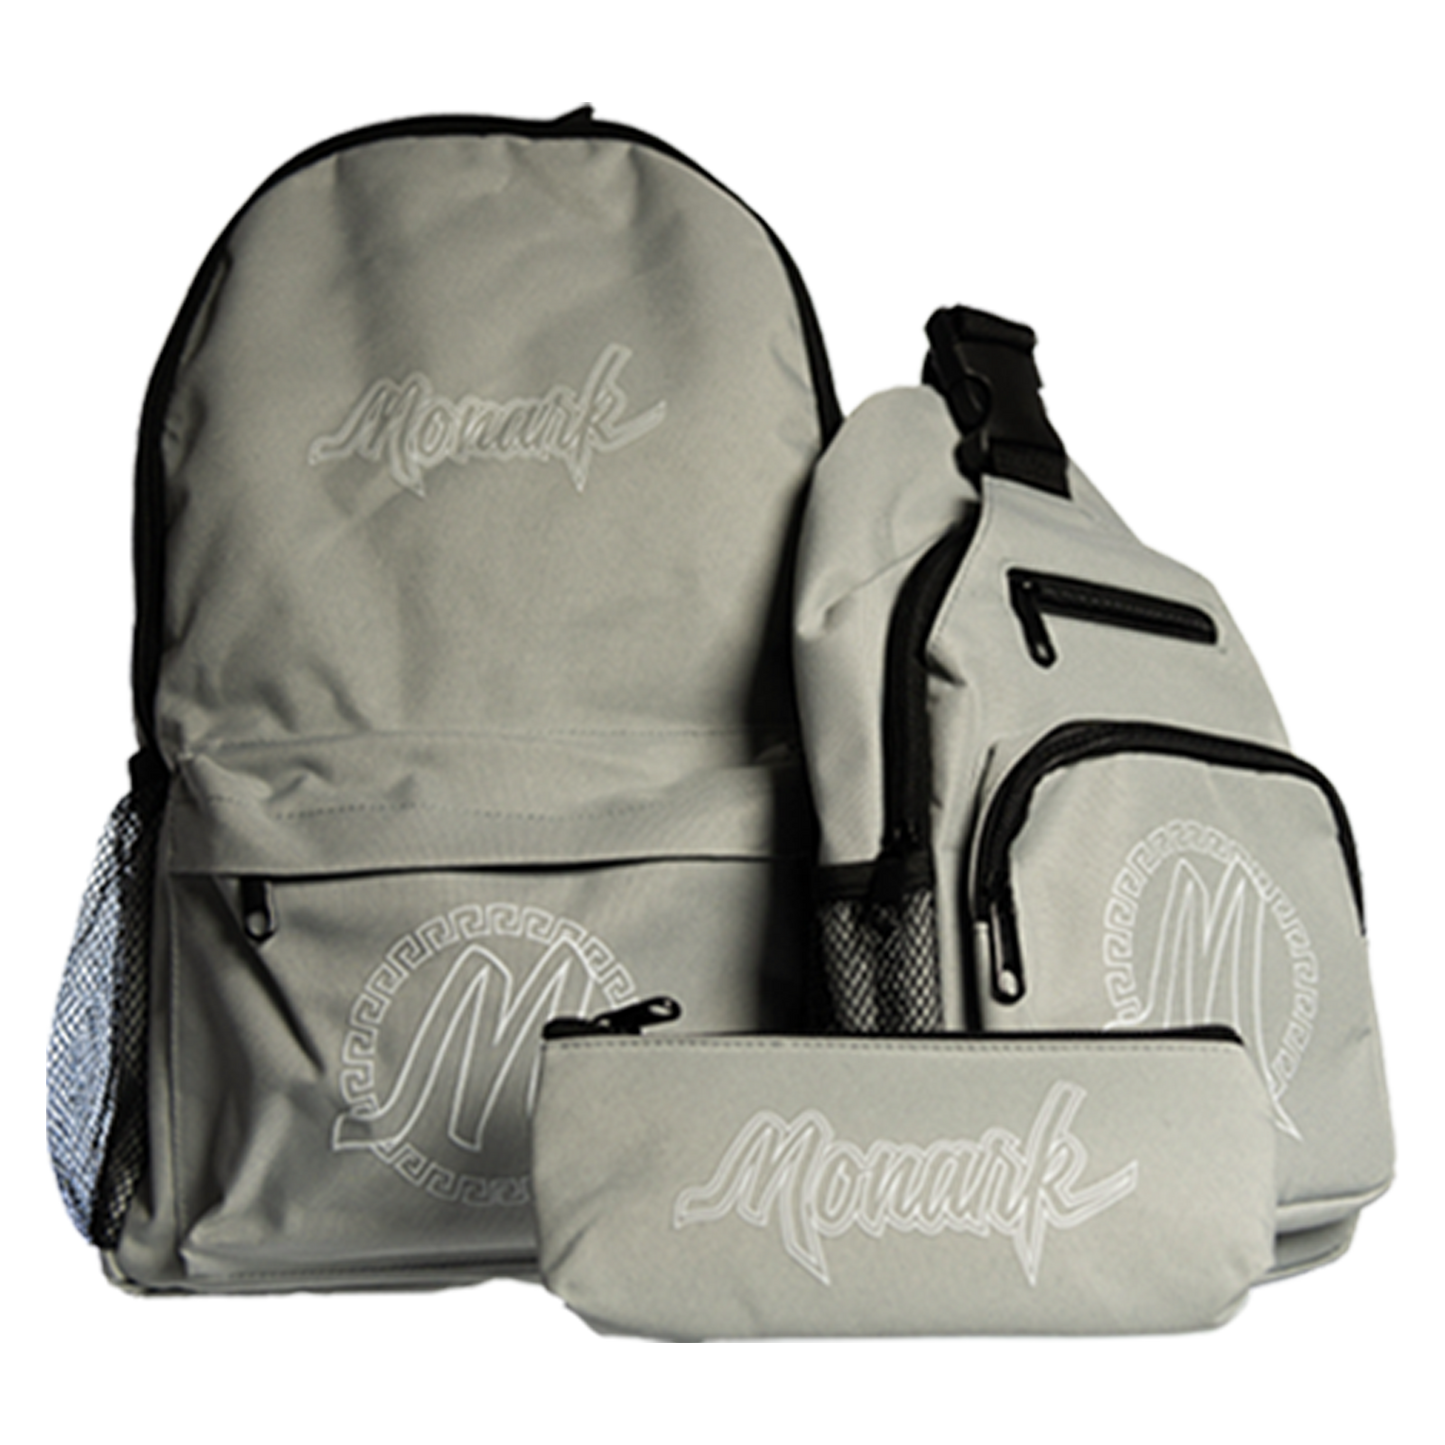 Gray Monark Backpack w/ Gray Shoulder Bag & Gray Pouch